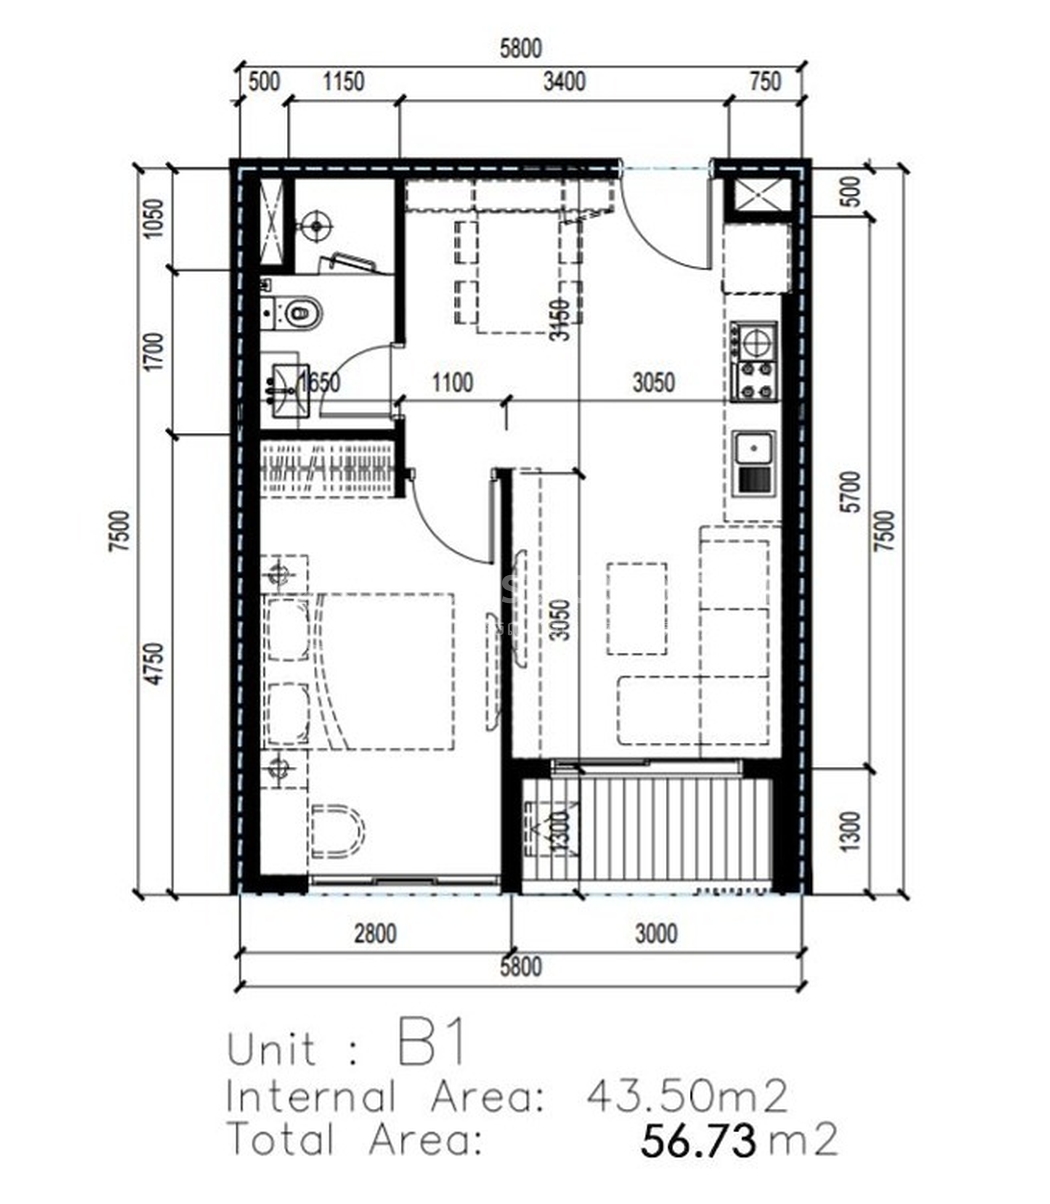 1BR Floor Plan.jpg